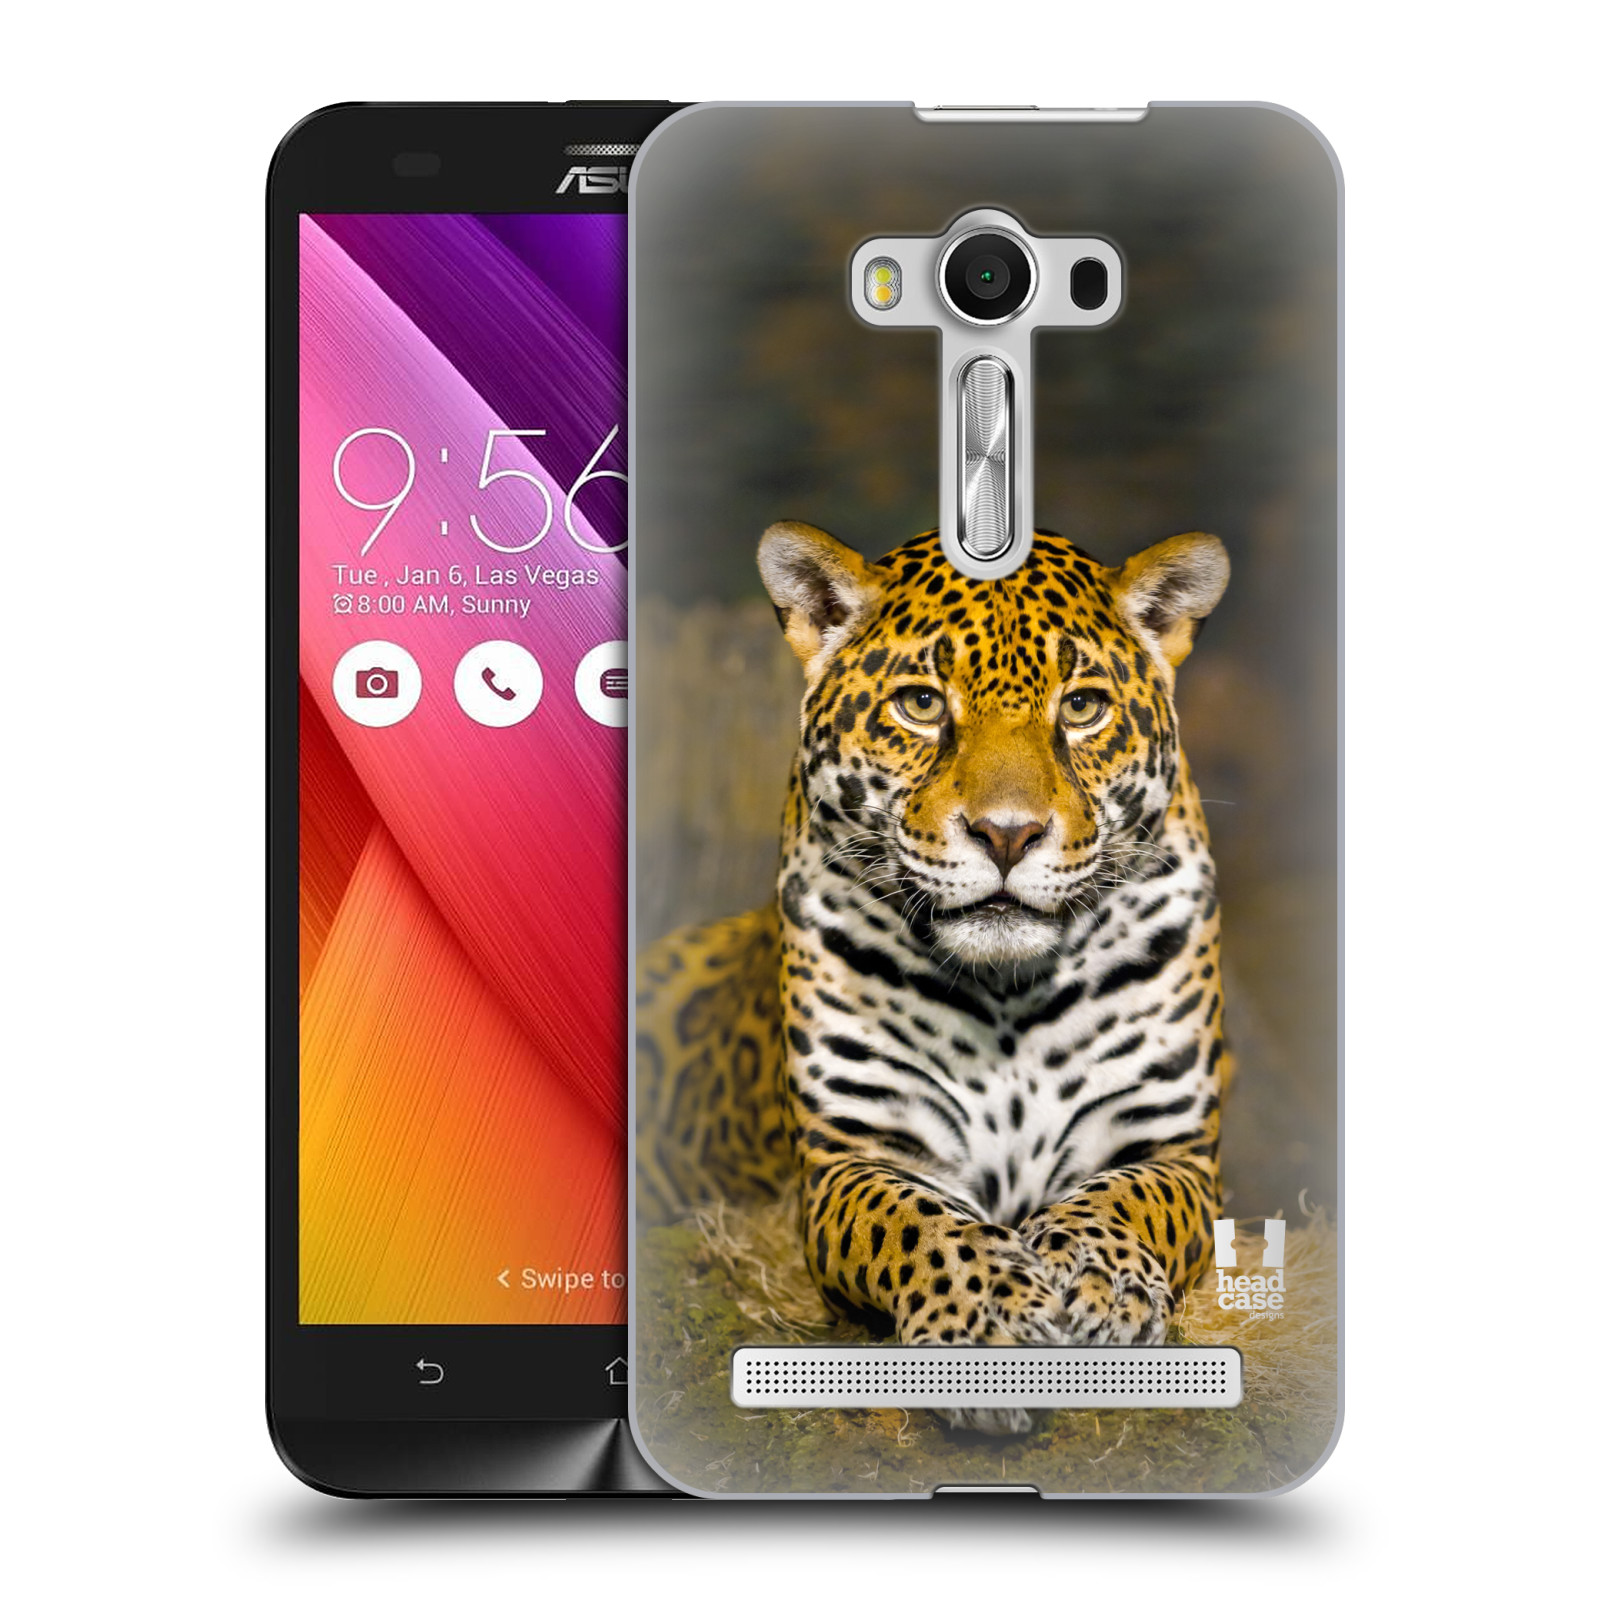 HEAD CASE plastový obal na mobil Asus Zenfone 2 LASER (5,5 displej ZE550KL) vzor slavná zvířata foto jaguár